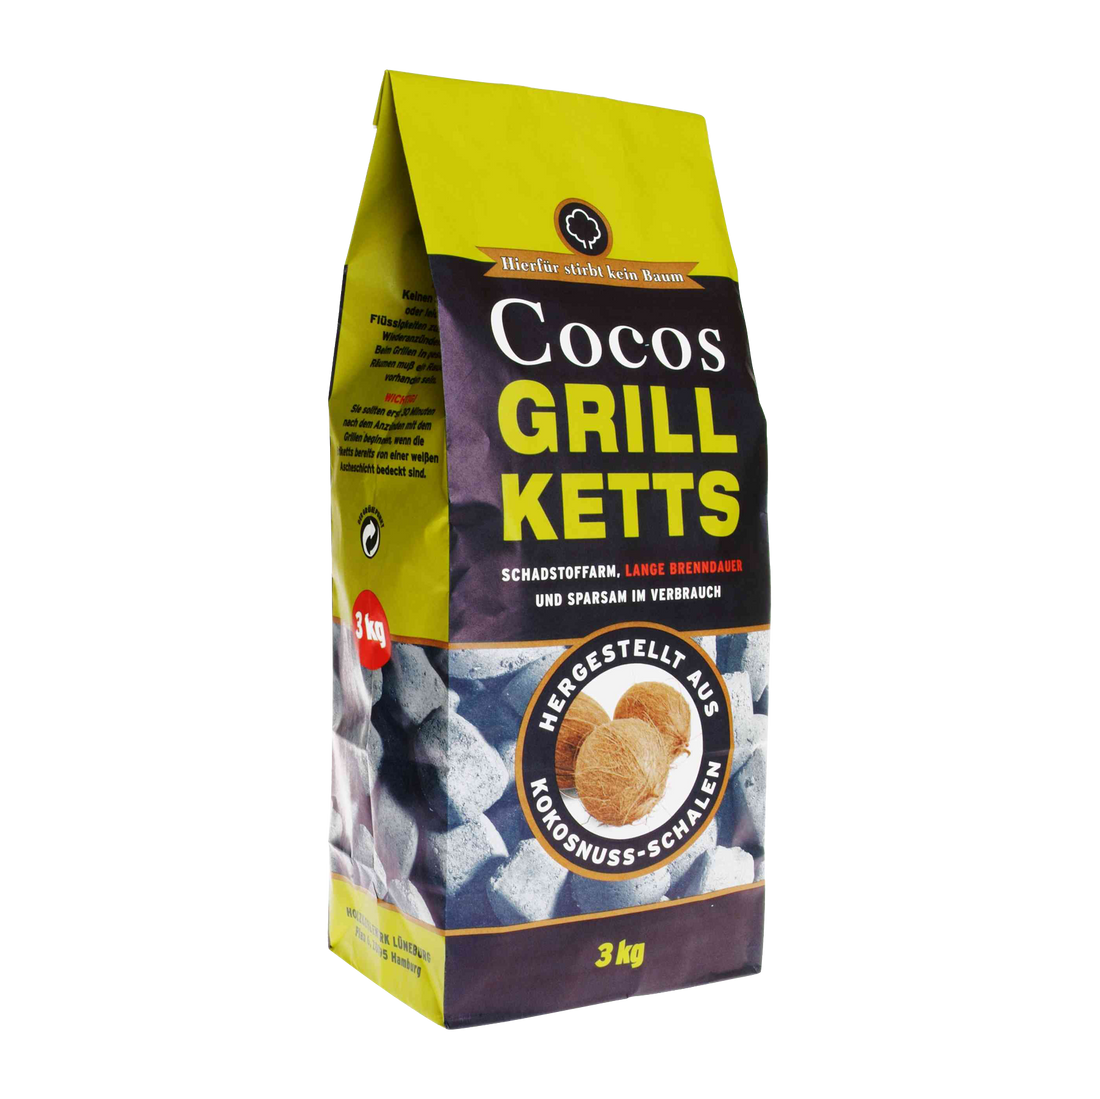 3-Kilogramm-Packung Cocos Grillbriketts aus Kokosnuss-Holzkohle